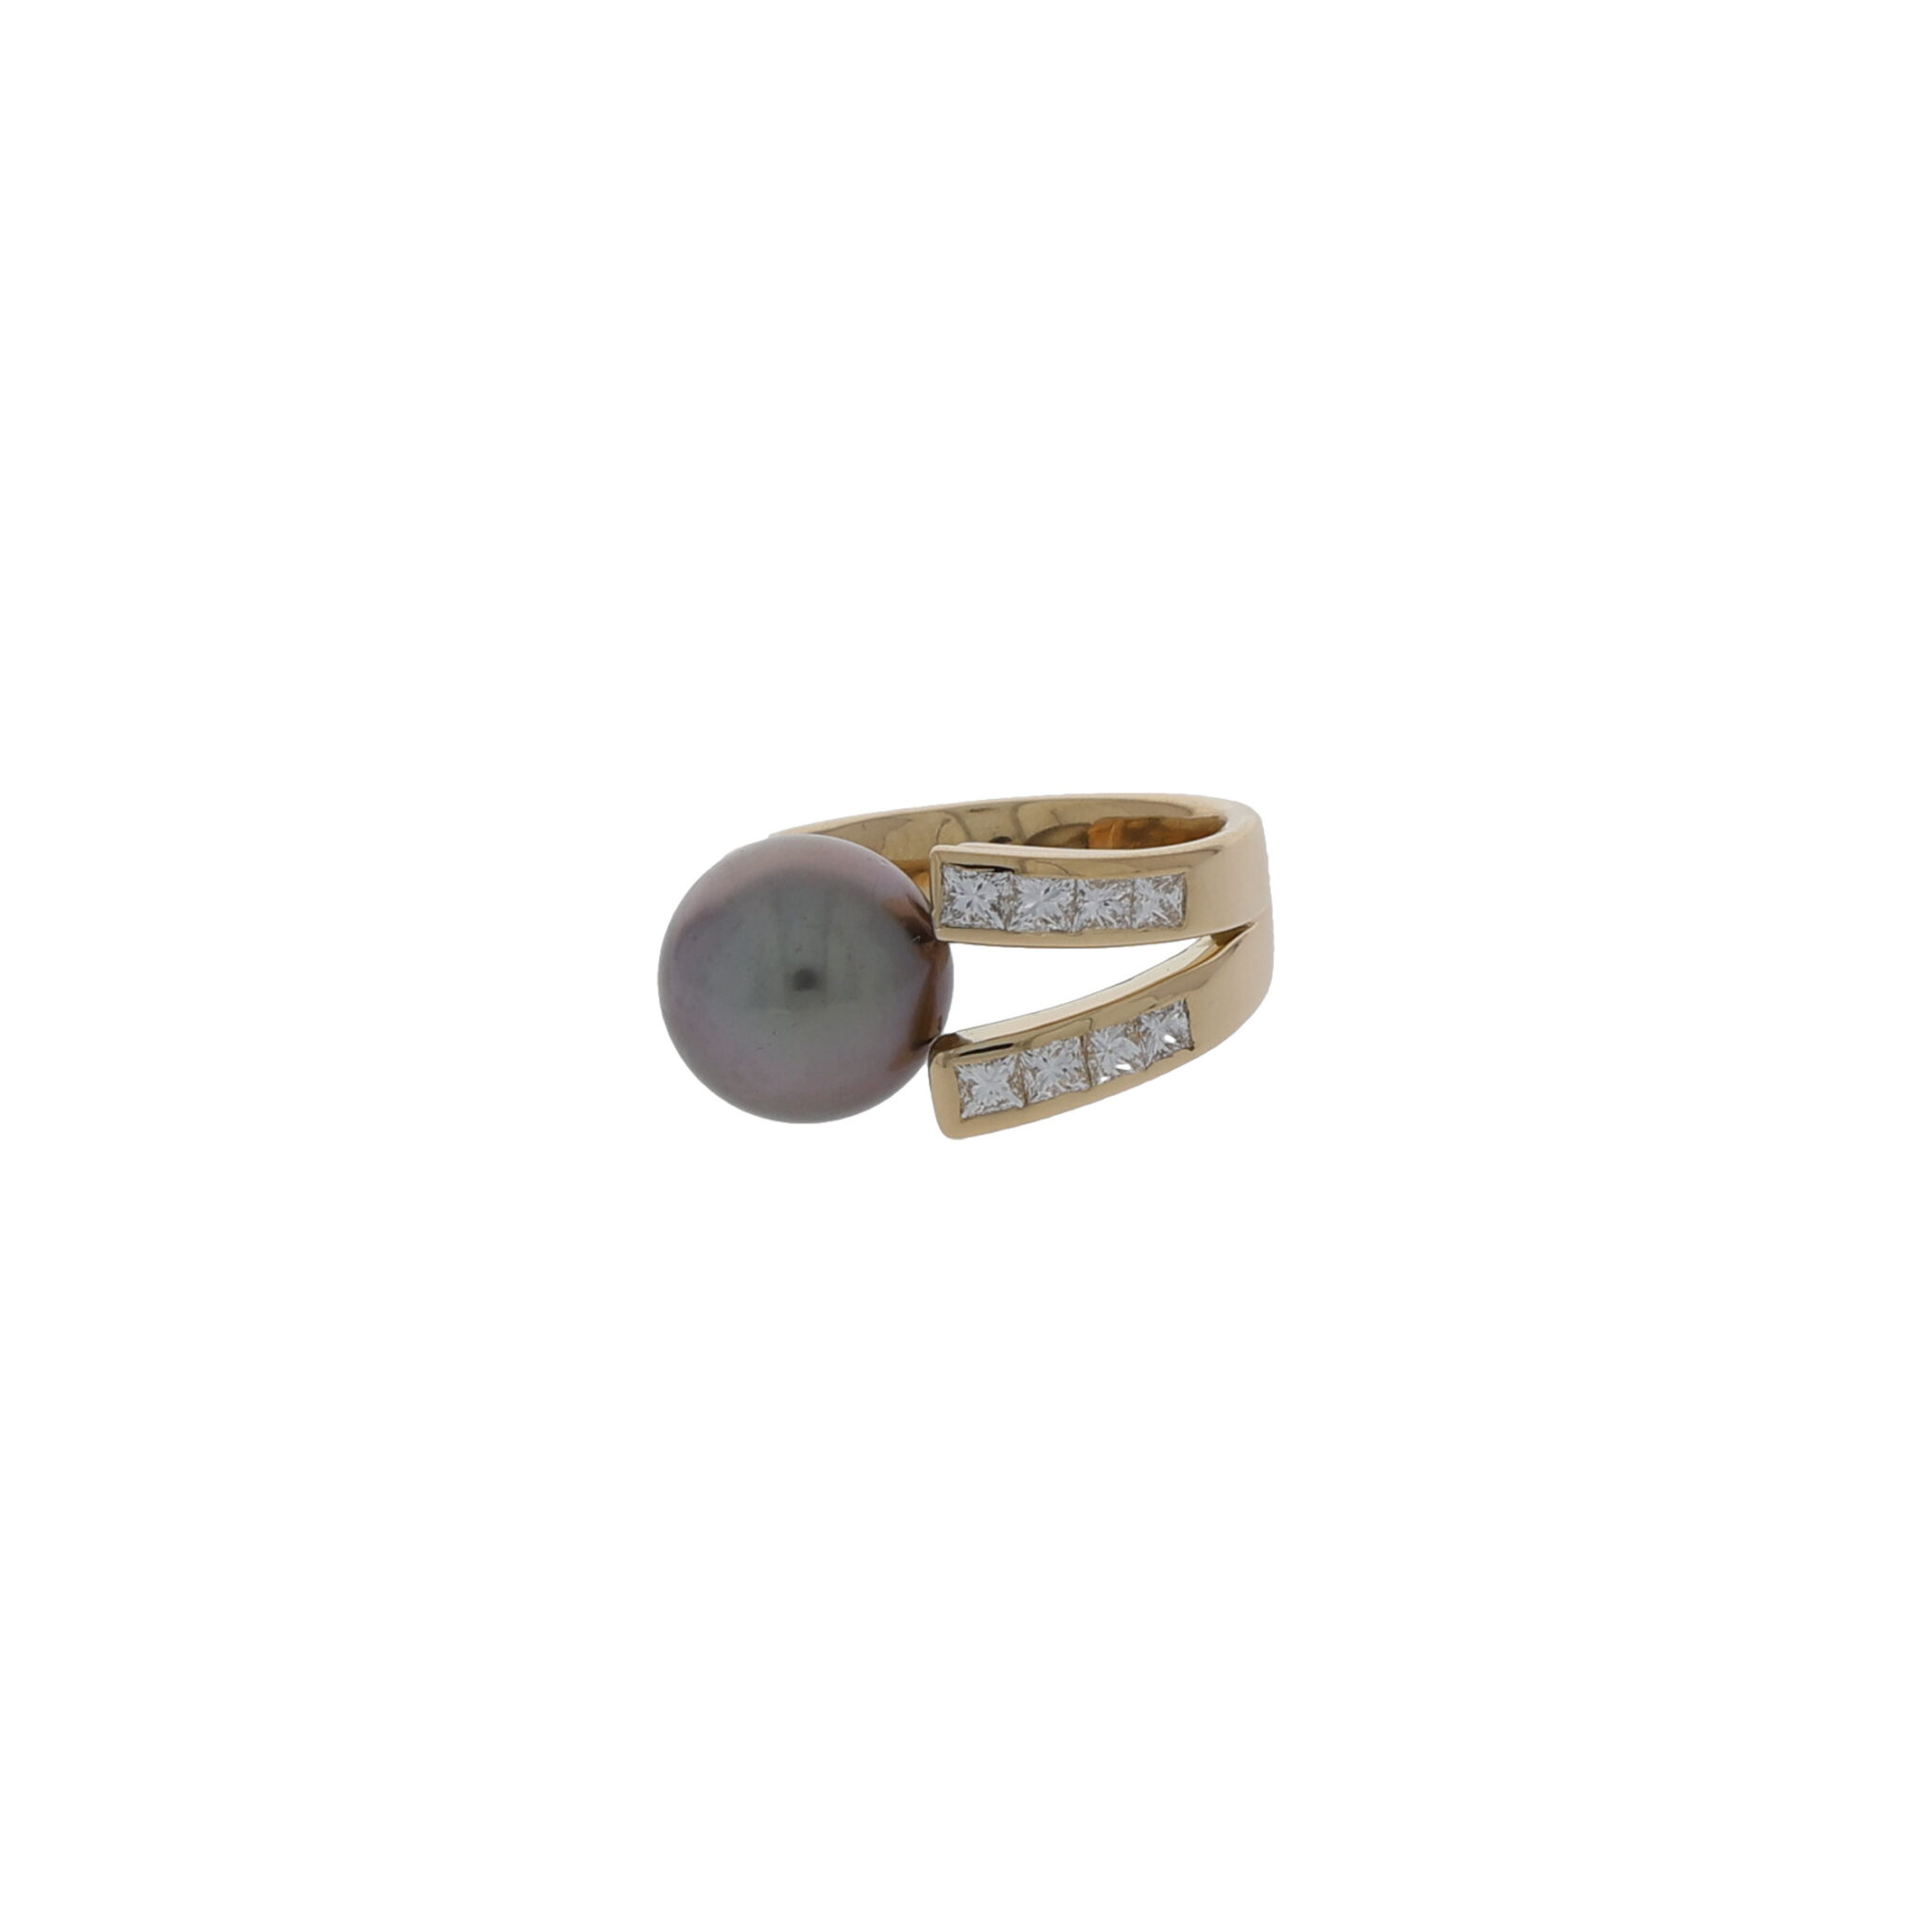 Tahiti Perlen Ring Gr.52 Gelbgold 750 / 18K mit 0,5ct Diamanten